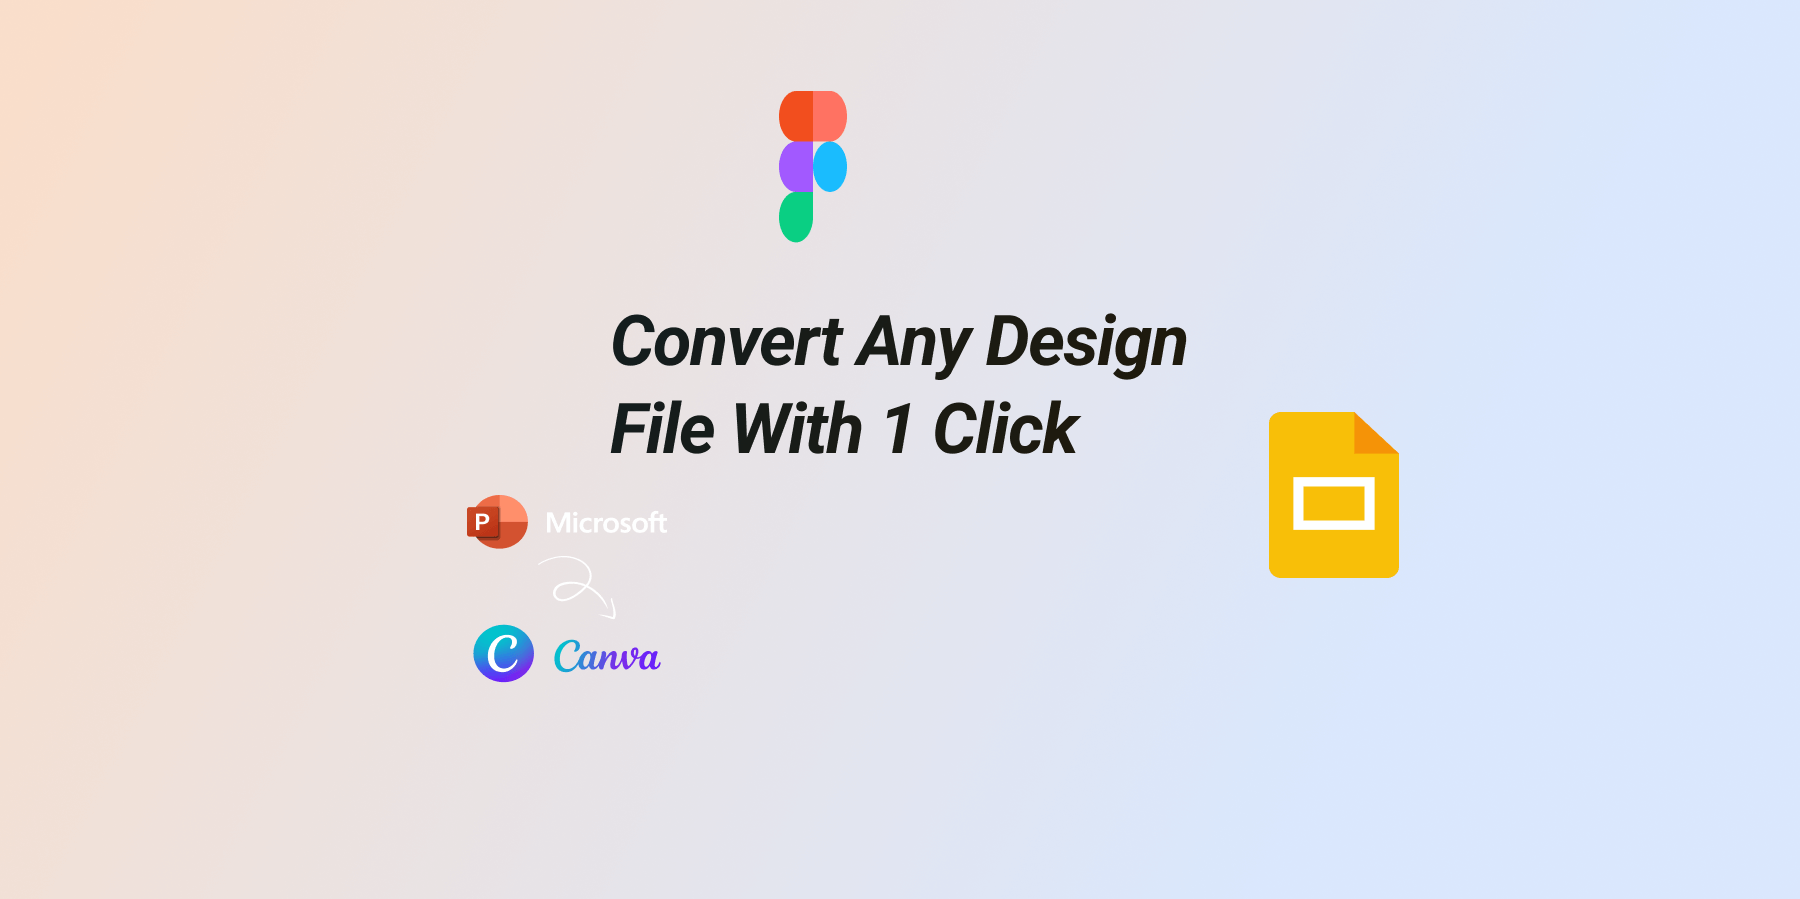 Convert Any Design file